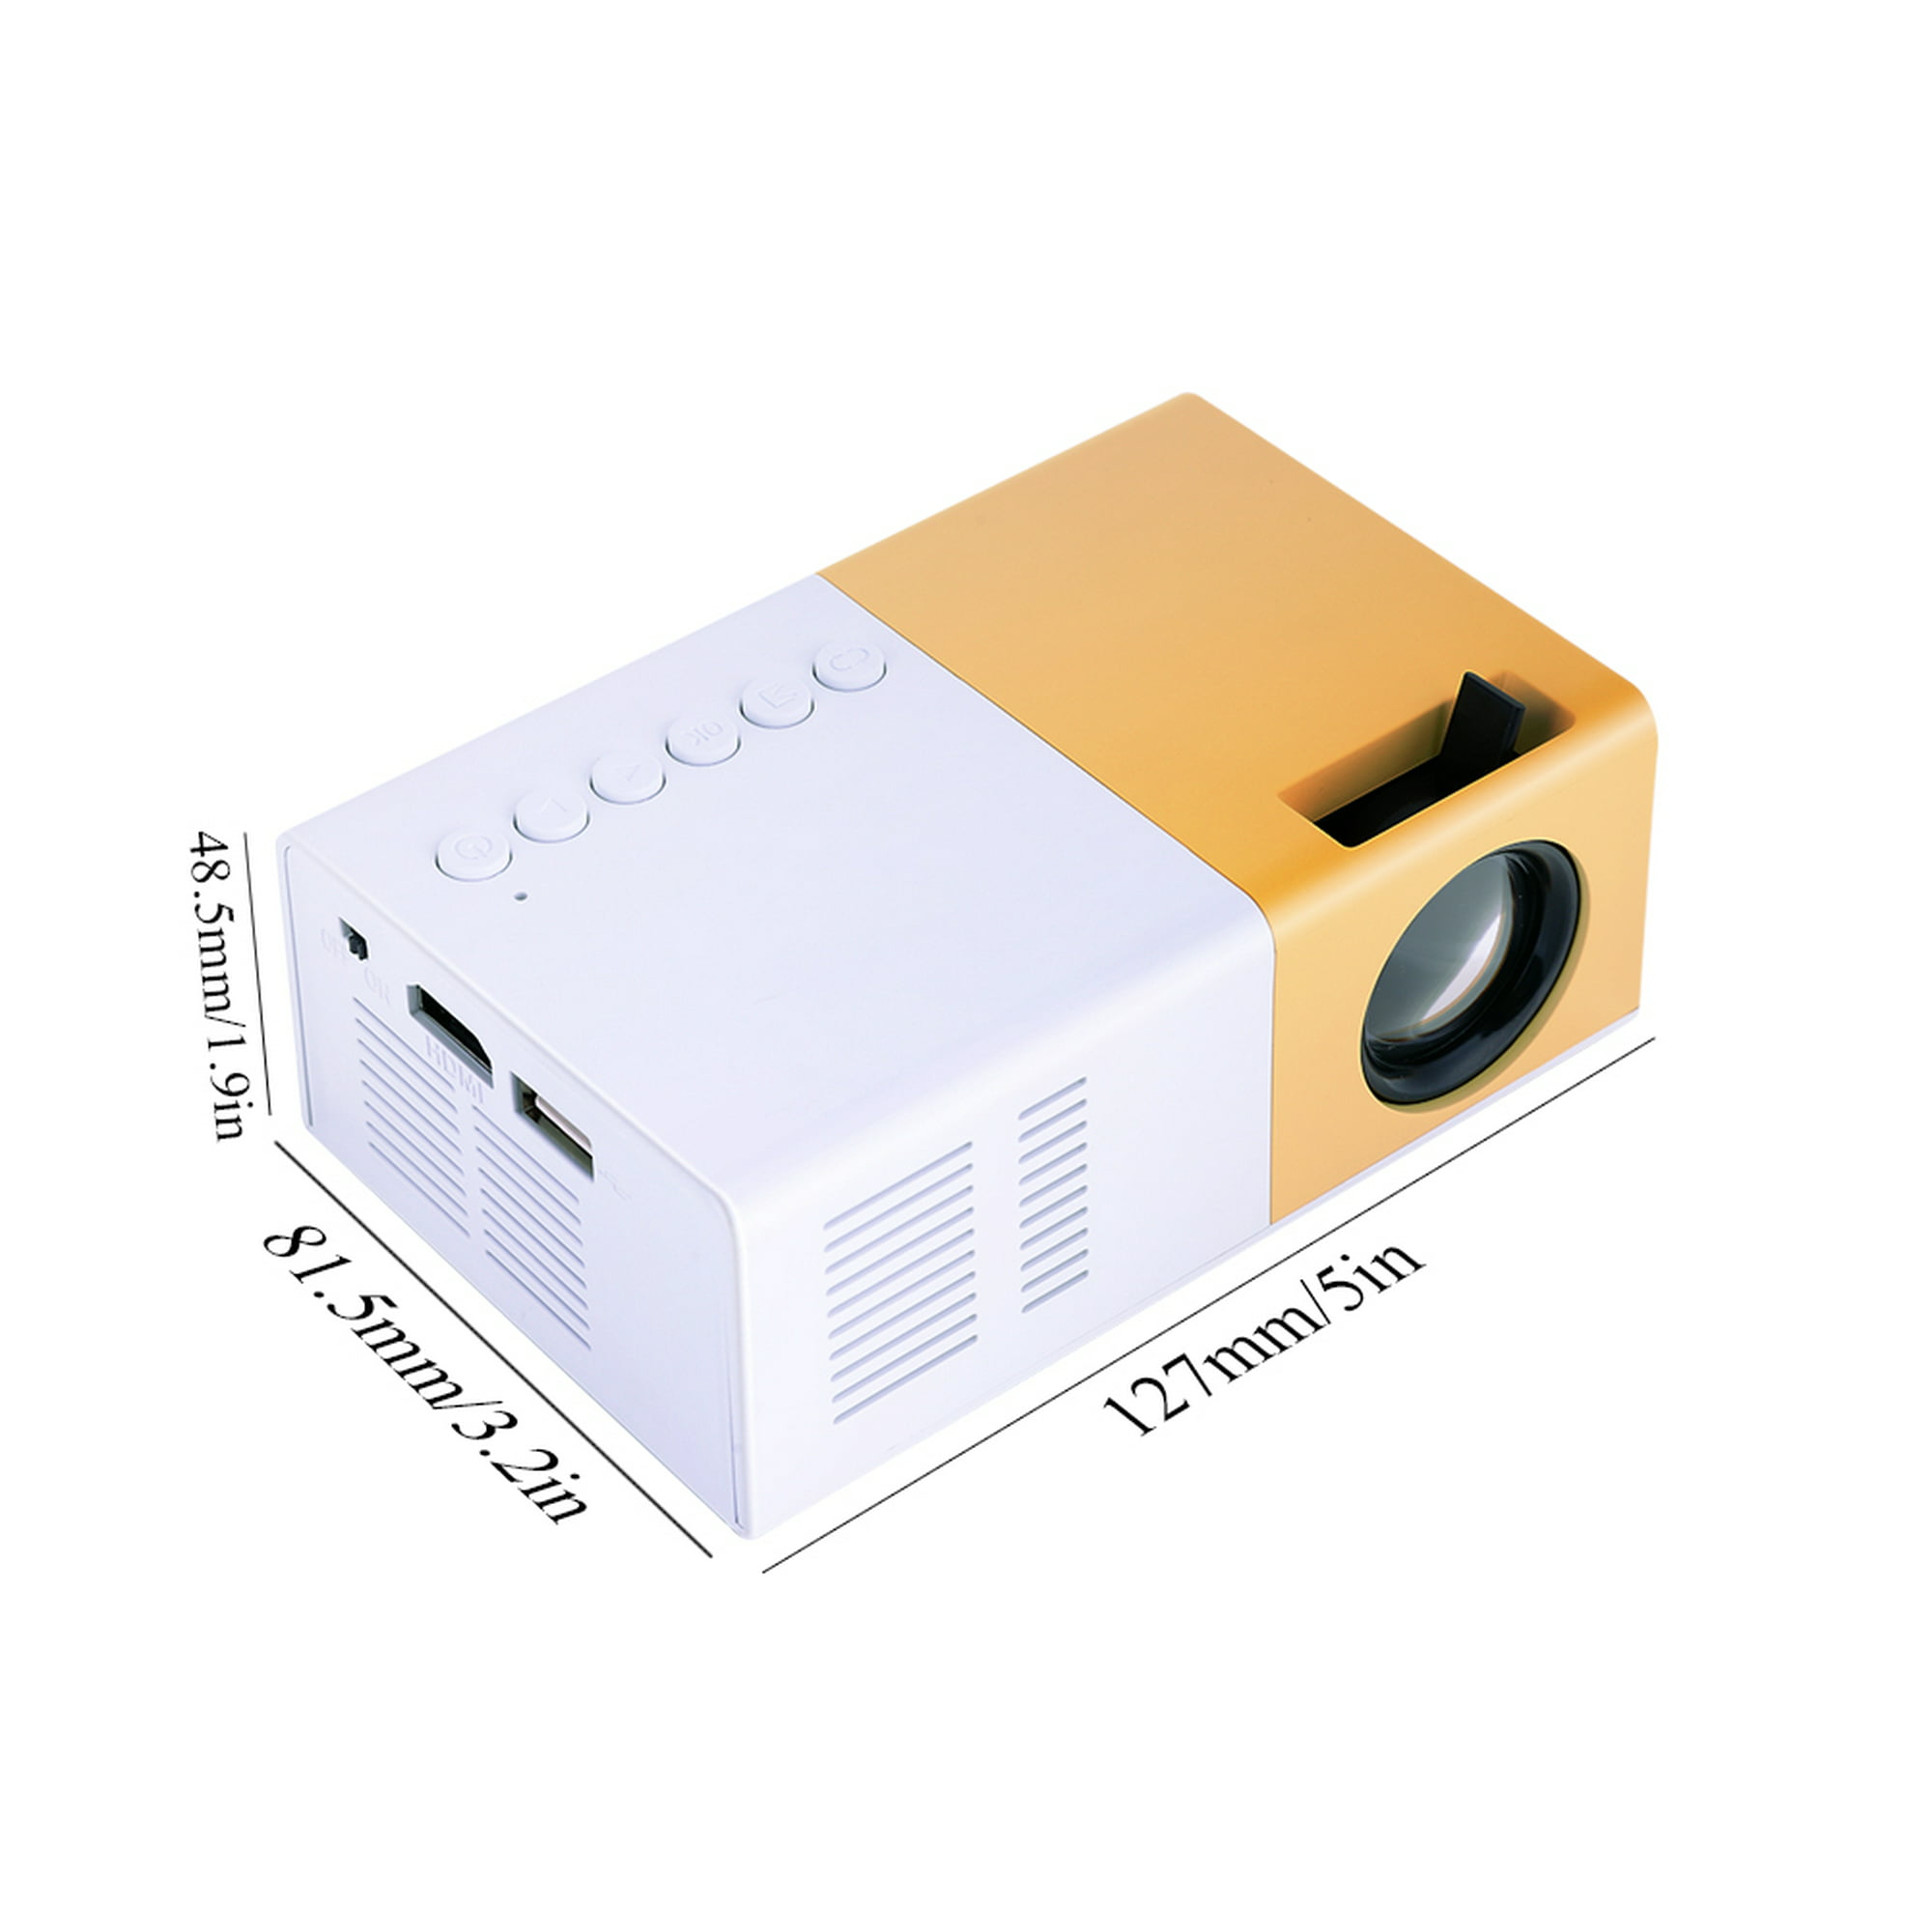 Proyector - Mini proyector portátil al aire libre, soporte 1080p